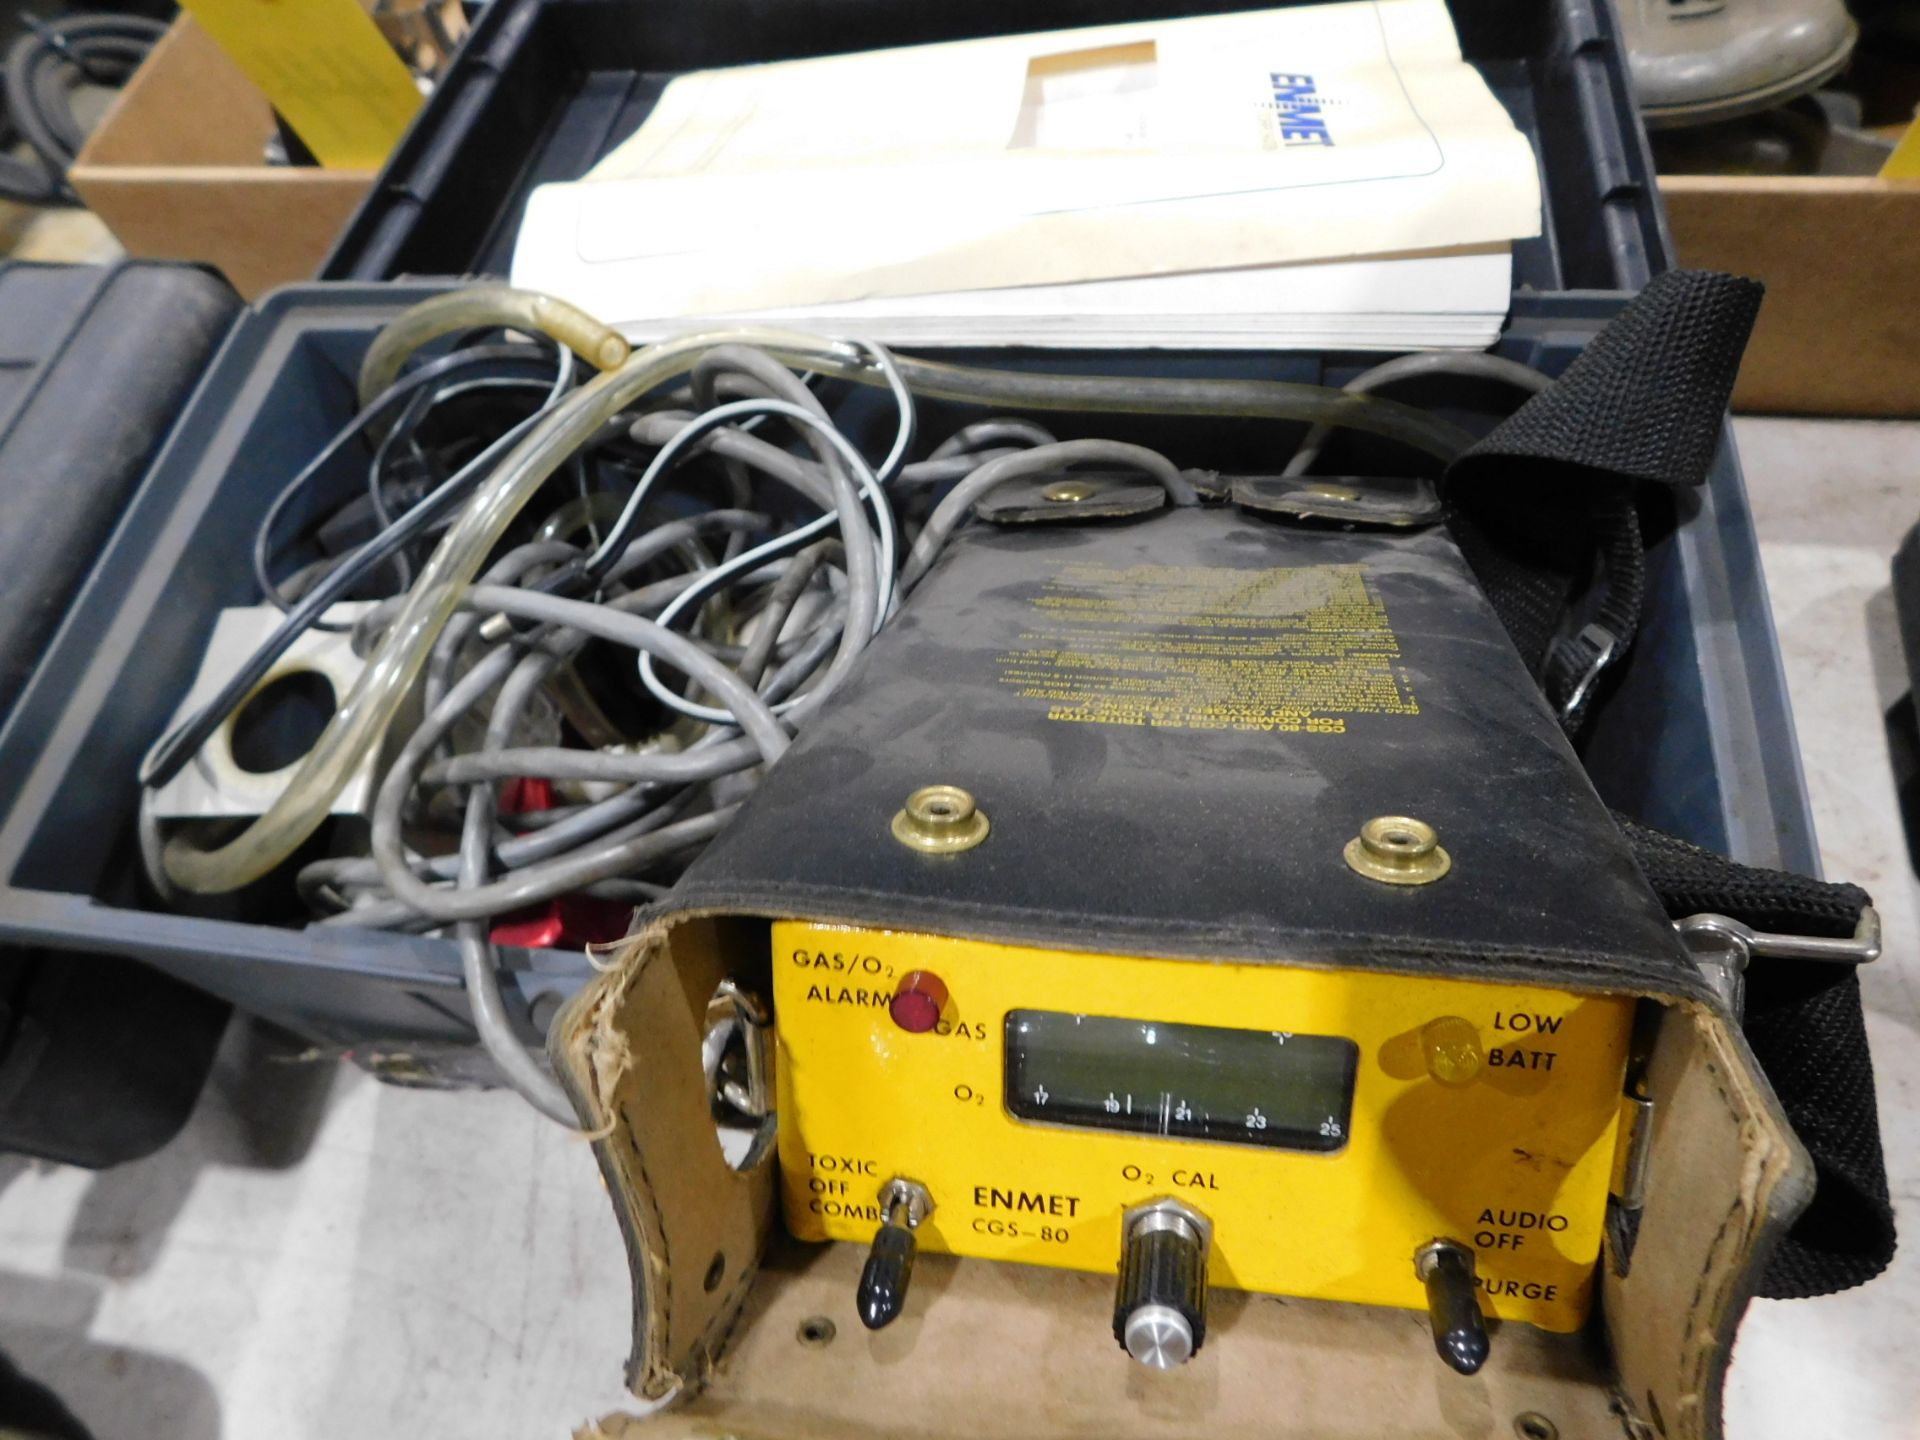 Emmet CGS-80 Portable Gas Detector